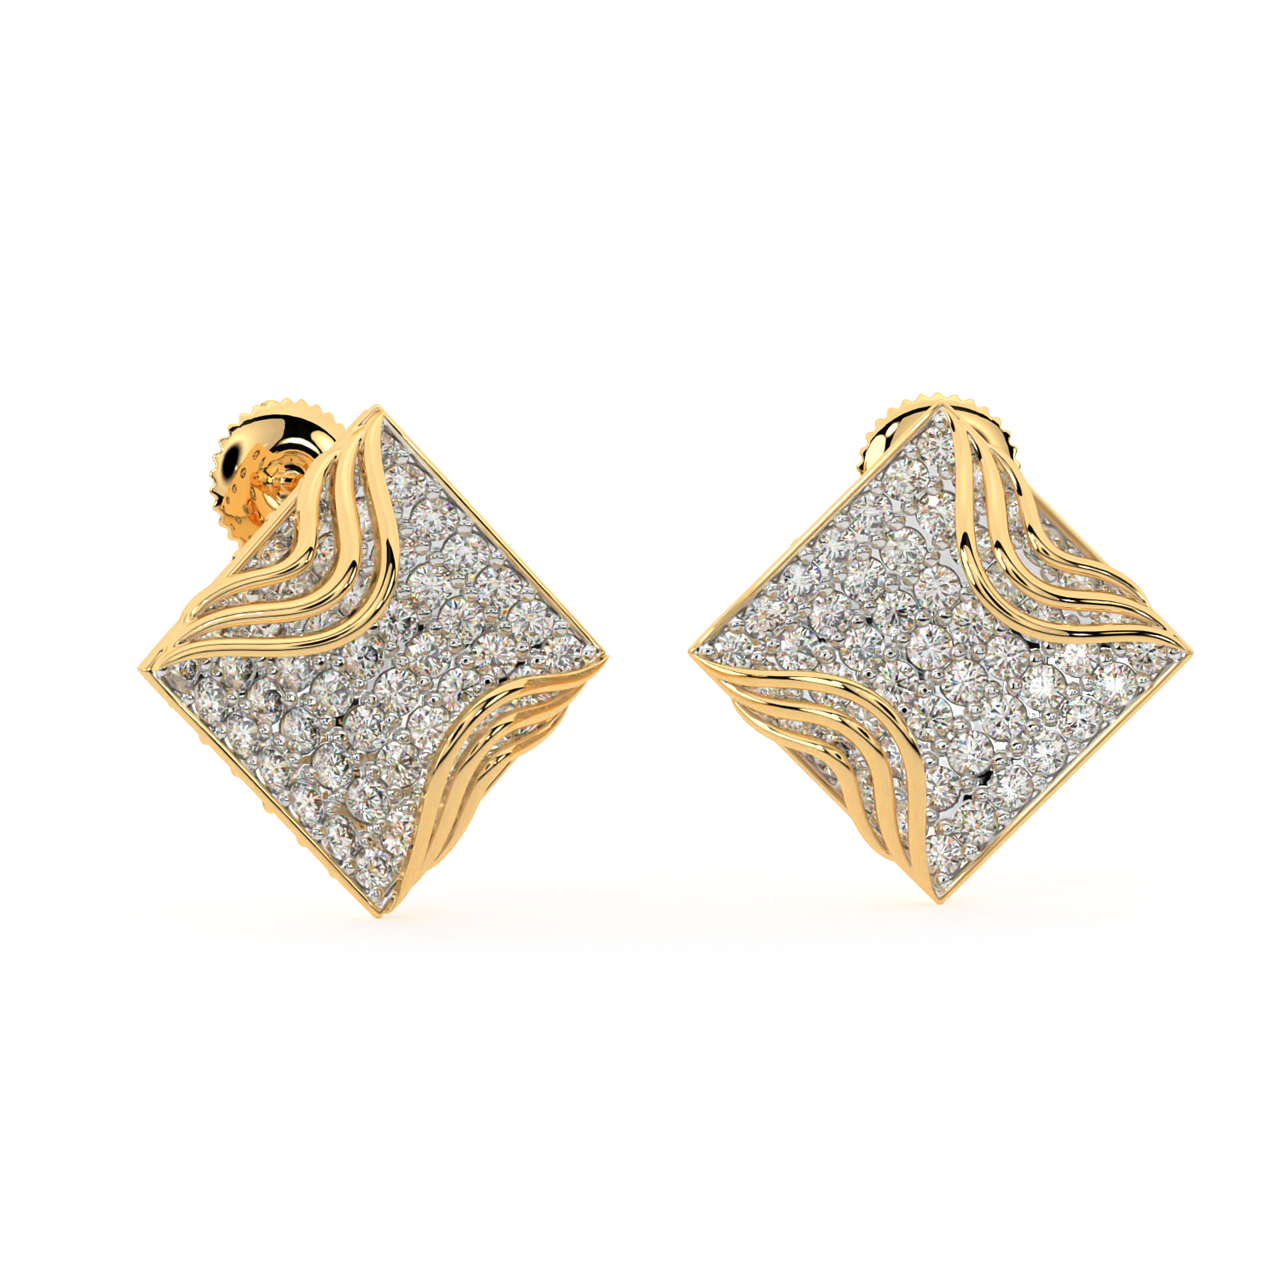 Quadrangle Design Diamond Earrings